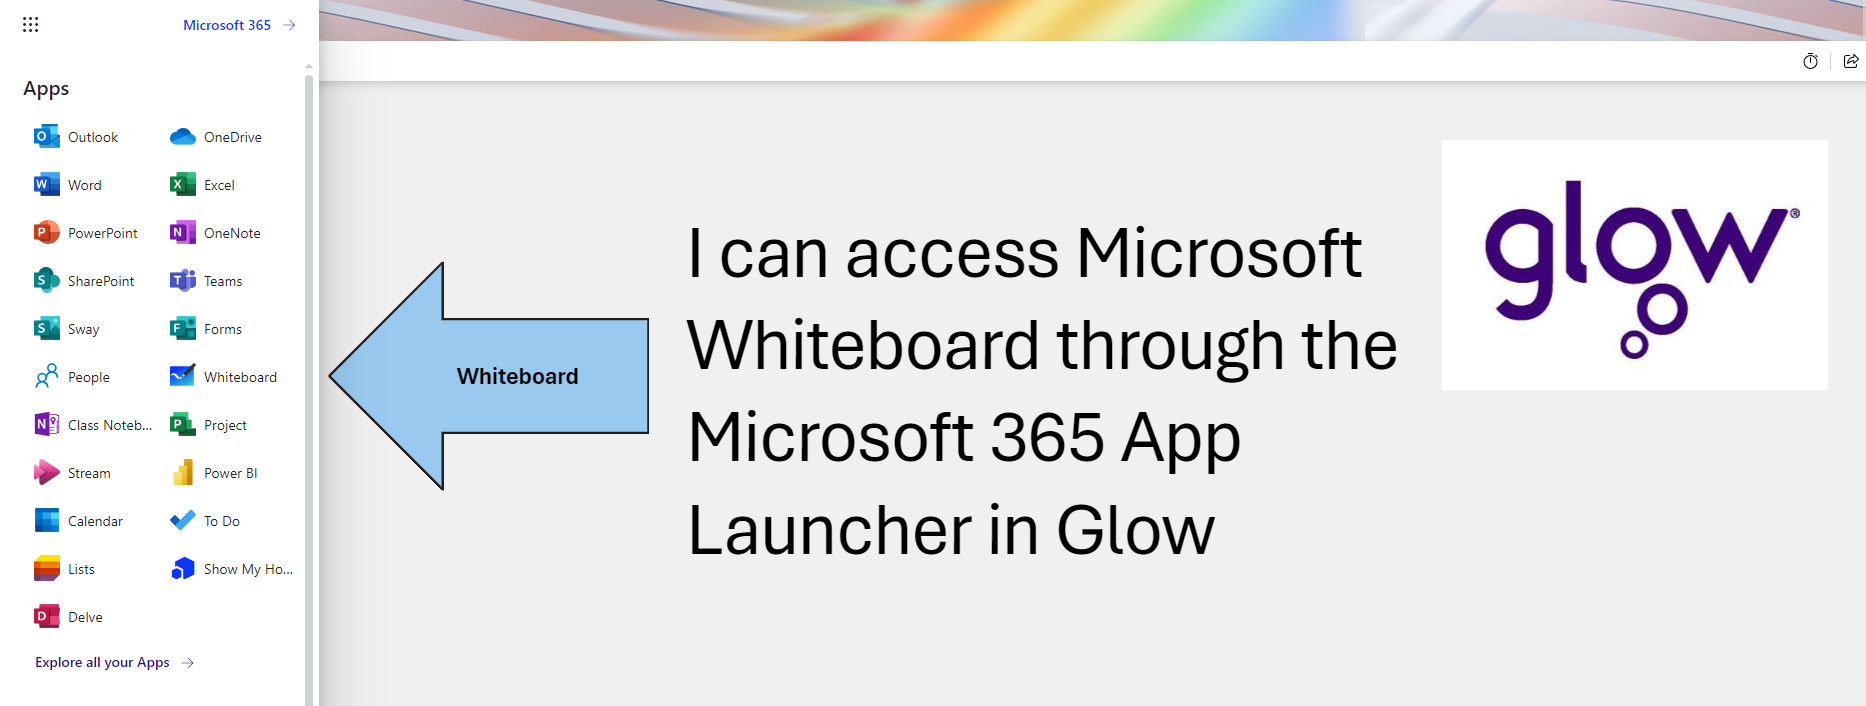 I can access Microsoft Whiteboard through the M365 app launcher. Screen shot of app launcher